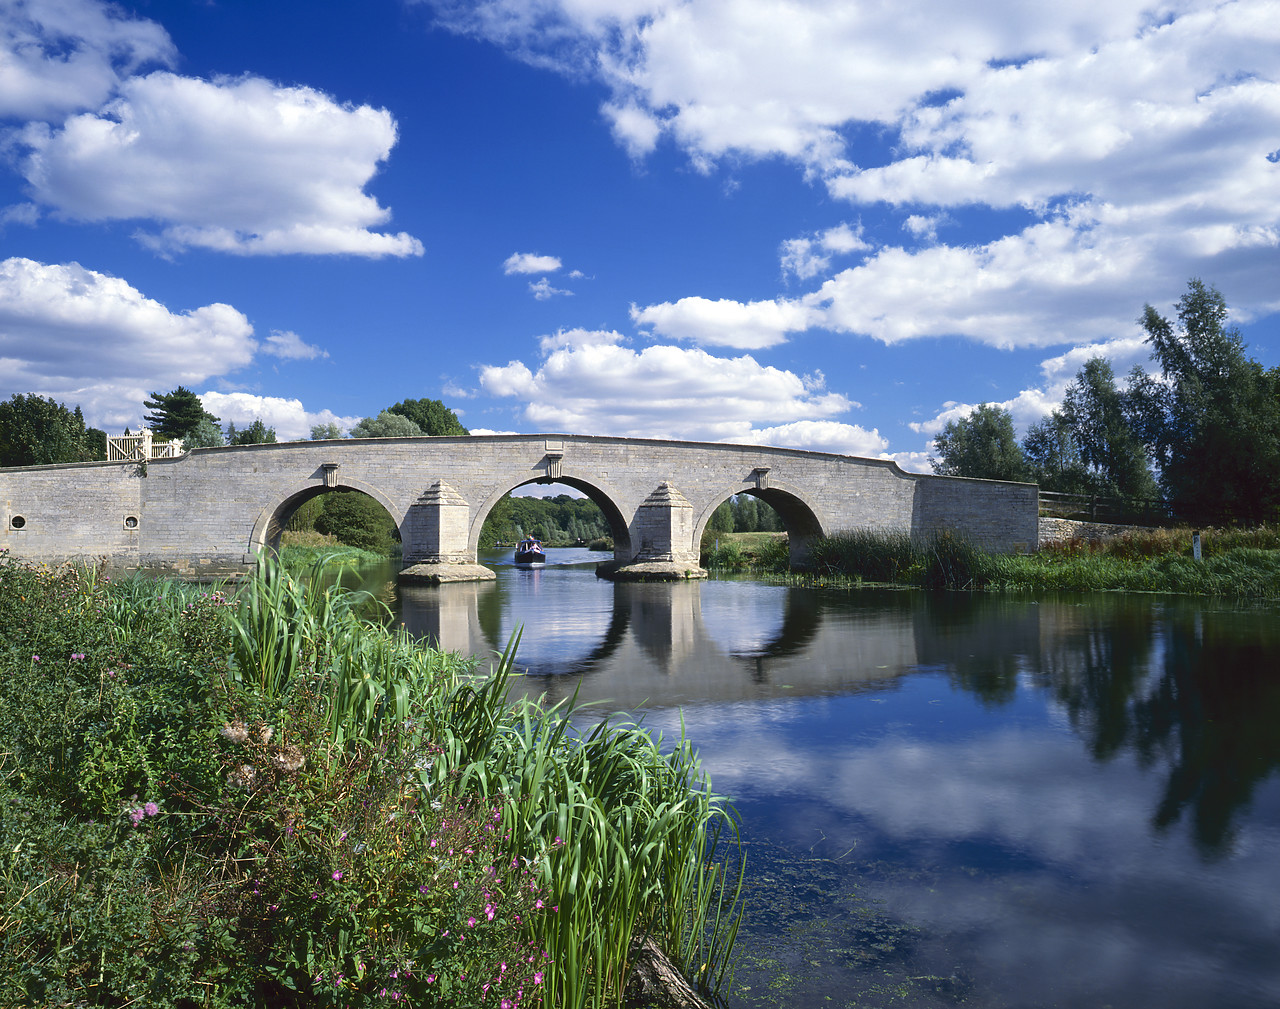 #892440-1 - Bridge over River Nene, near Peterborough, Cambridgeshire, England